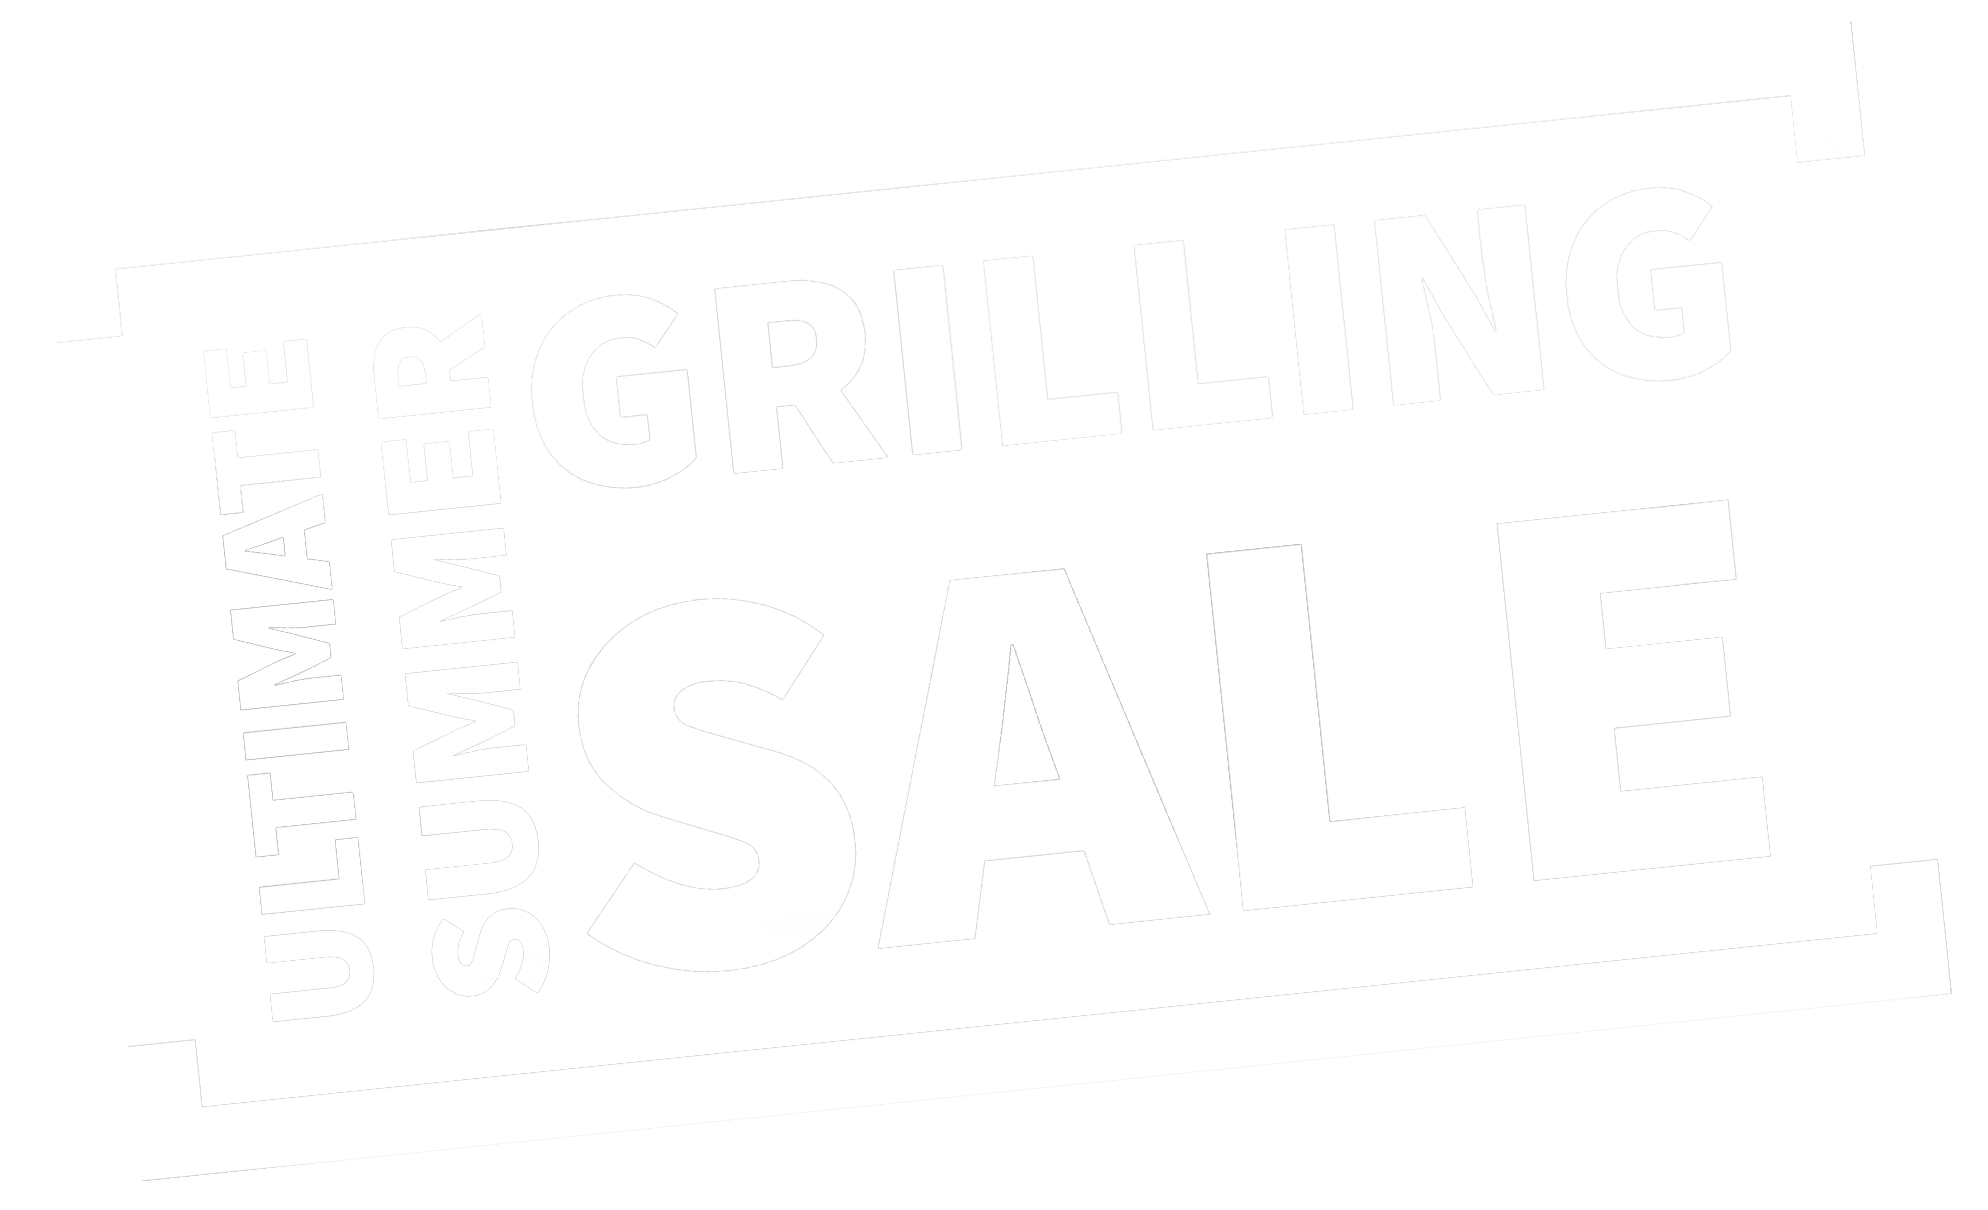 Ultimate Grilling SALE FG 2